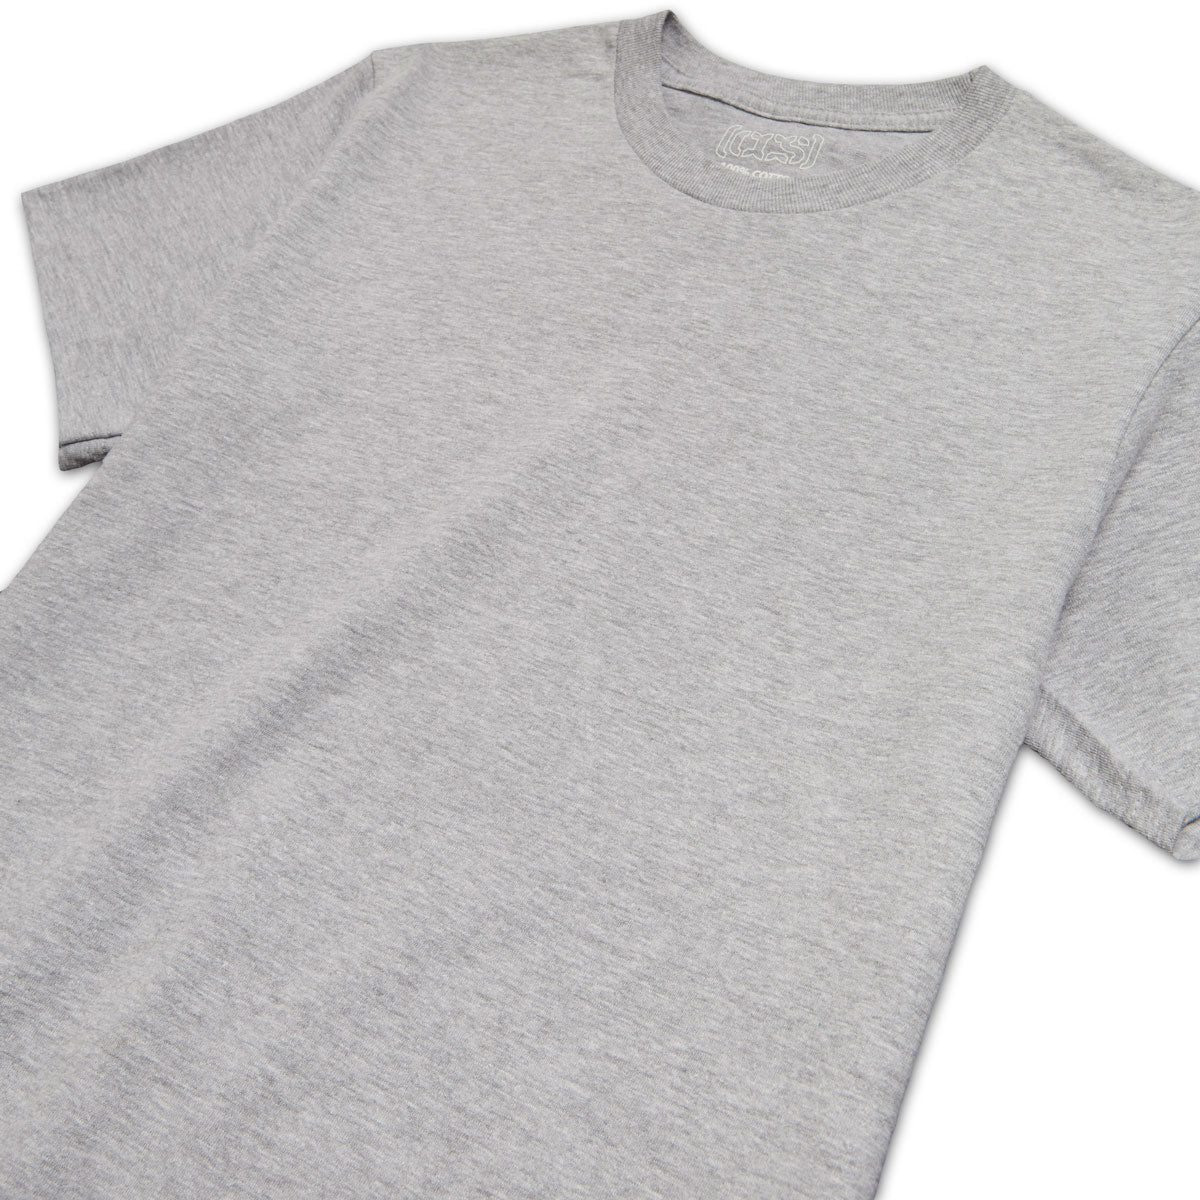 CCS Original Heavyweight T-Shirt - Grey image 2